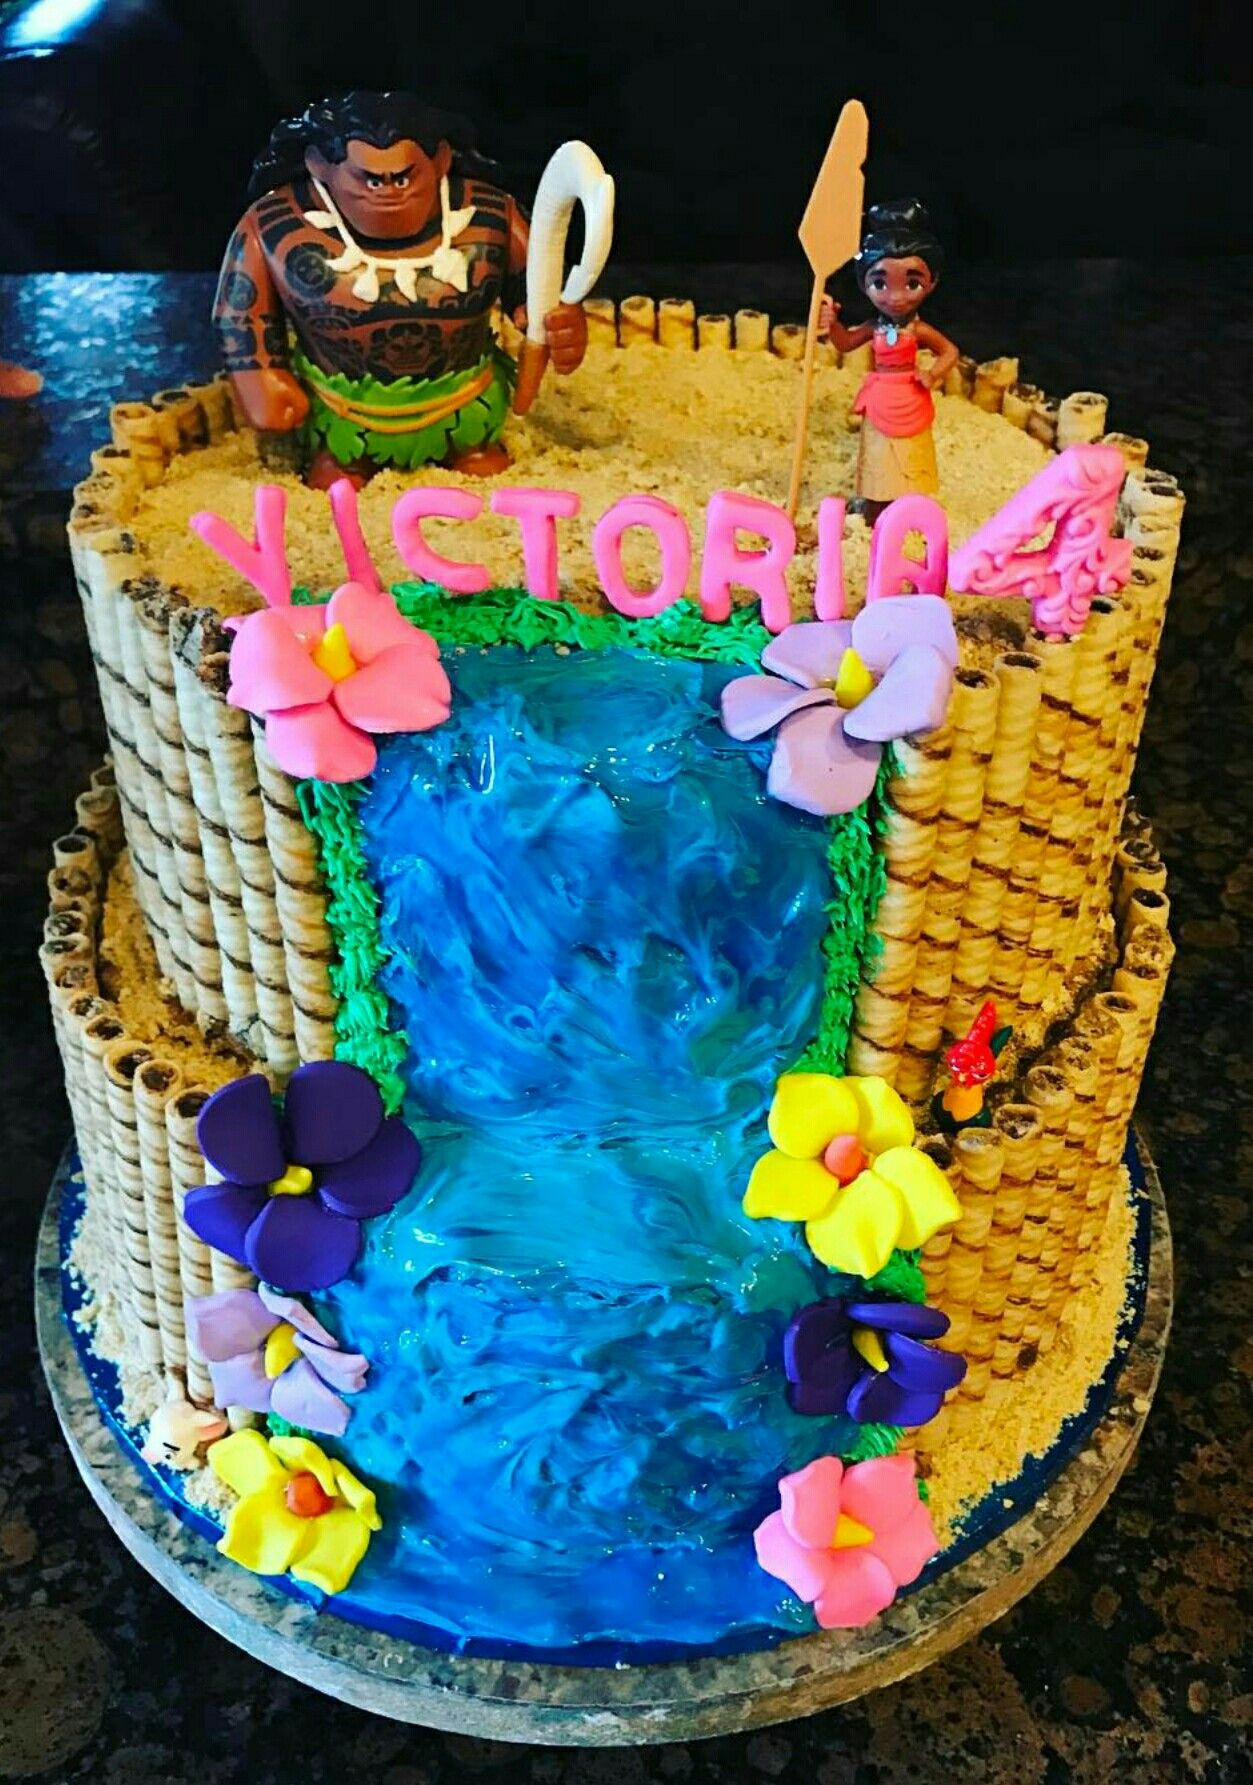 Best ideas about Moana Birthday Cake Ideas
. Save or Pin Moana cake birthday torta mohana Pinterest Now.